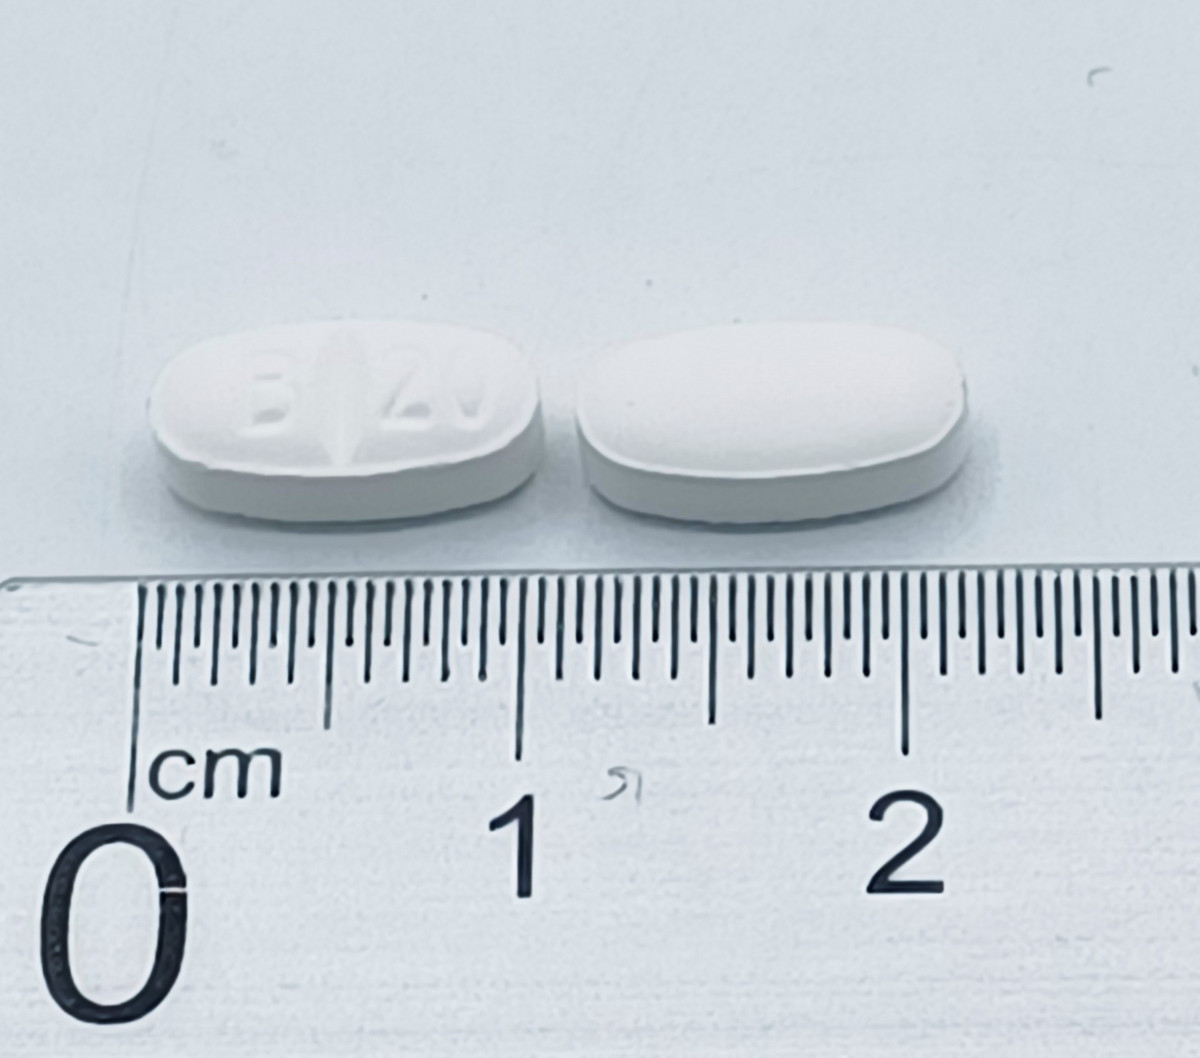 ABRILIA 20 MG COMPRIMIDOS EFG, 7 comprimidos (Blister Al/Al/PA-PVC) fotografía de la forma farmacéutica.